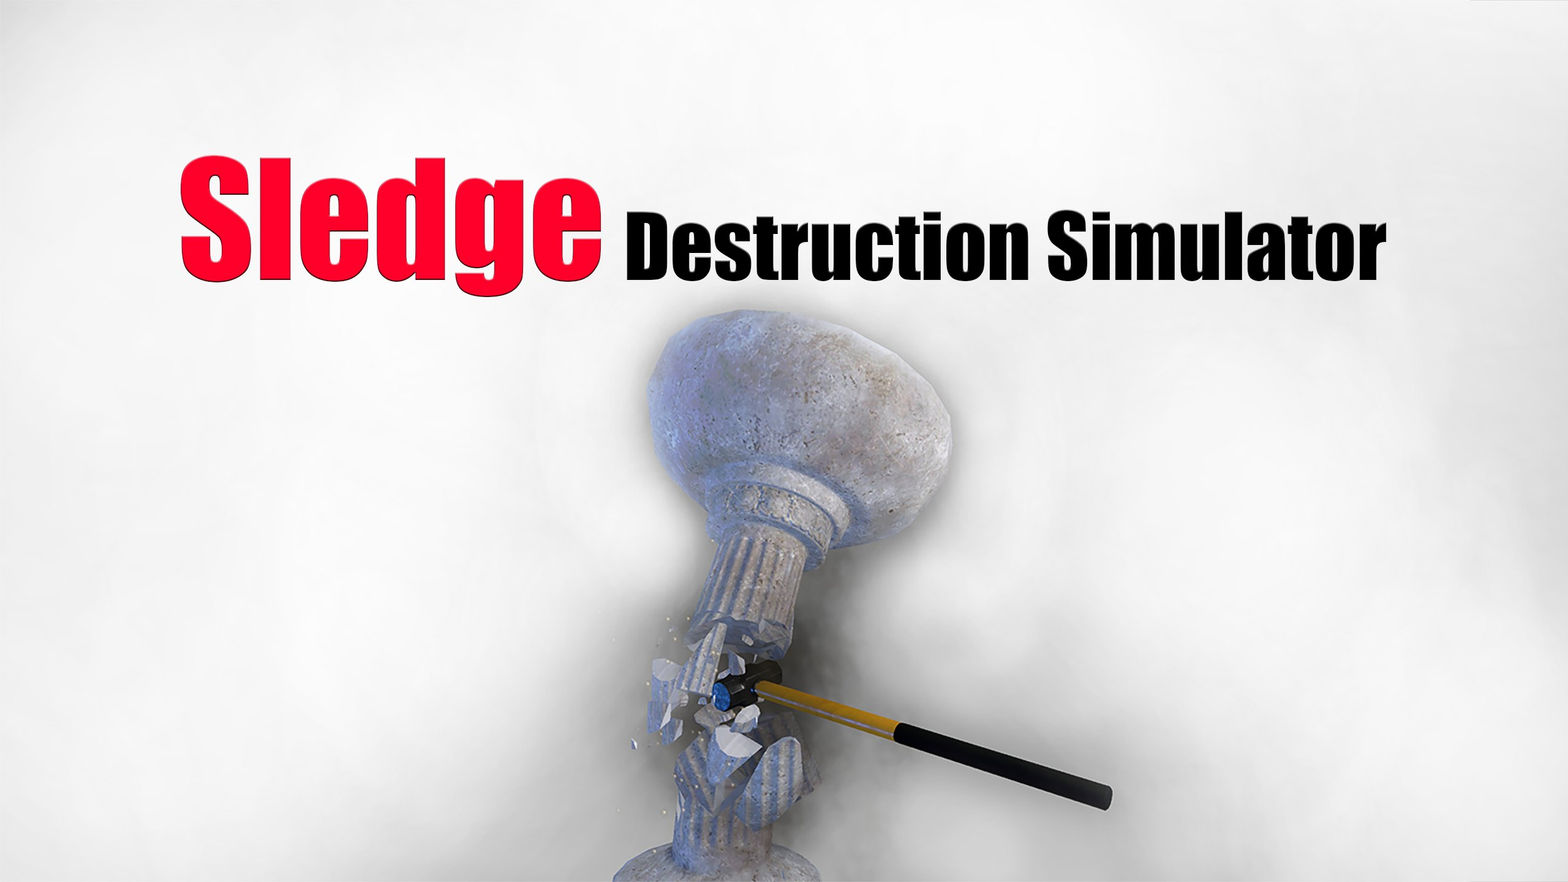 Sledge Destruction Simulator